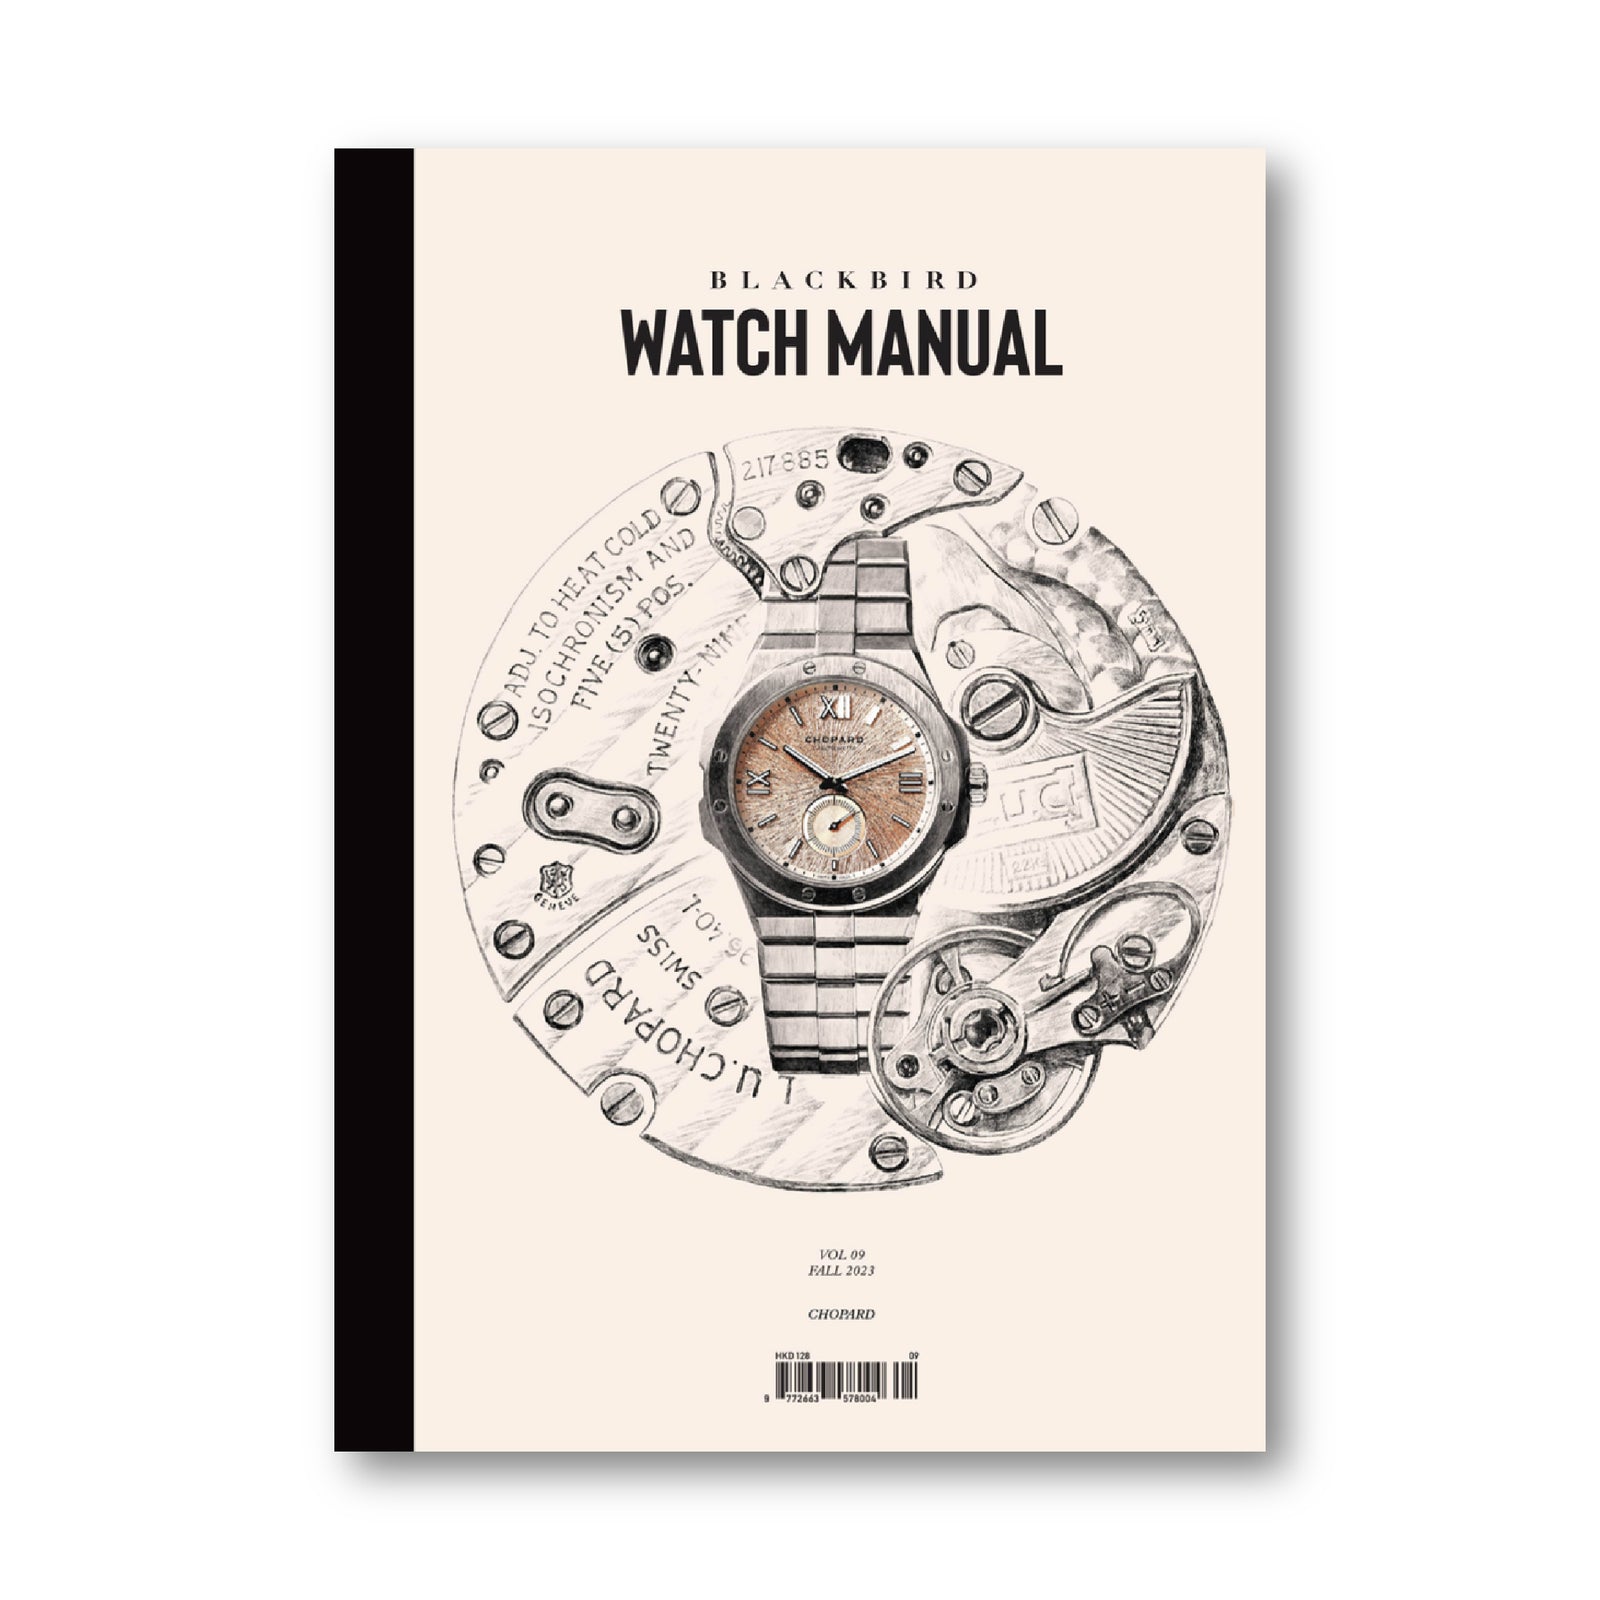 Blackbird Watch Manual Vol.9